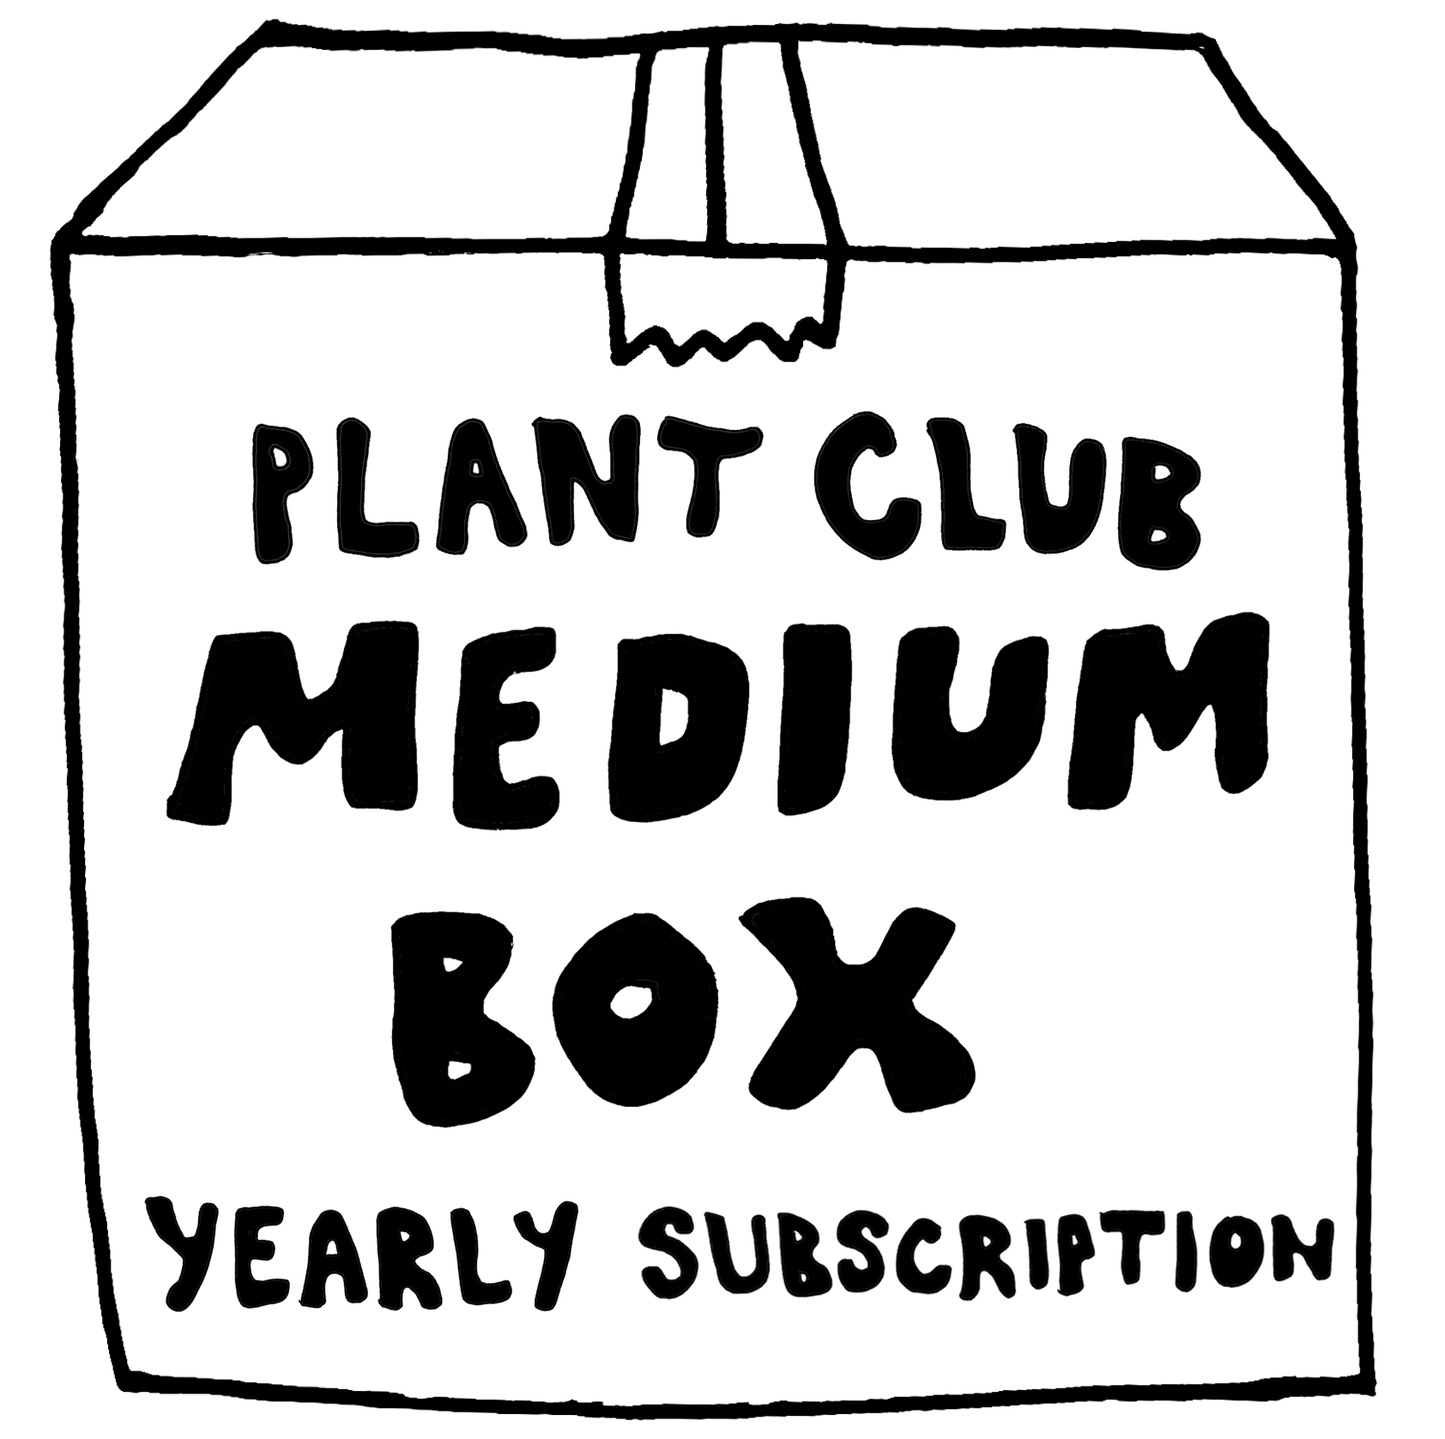 PLANT CLUB - MEDIUM BOX (YEARLY SUBSCRIPTION)